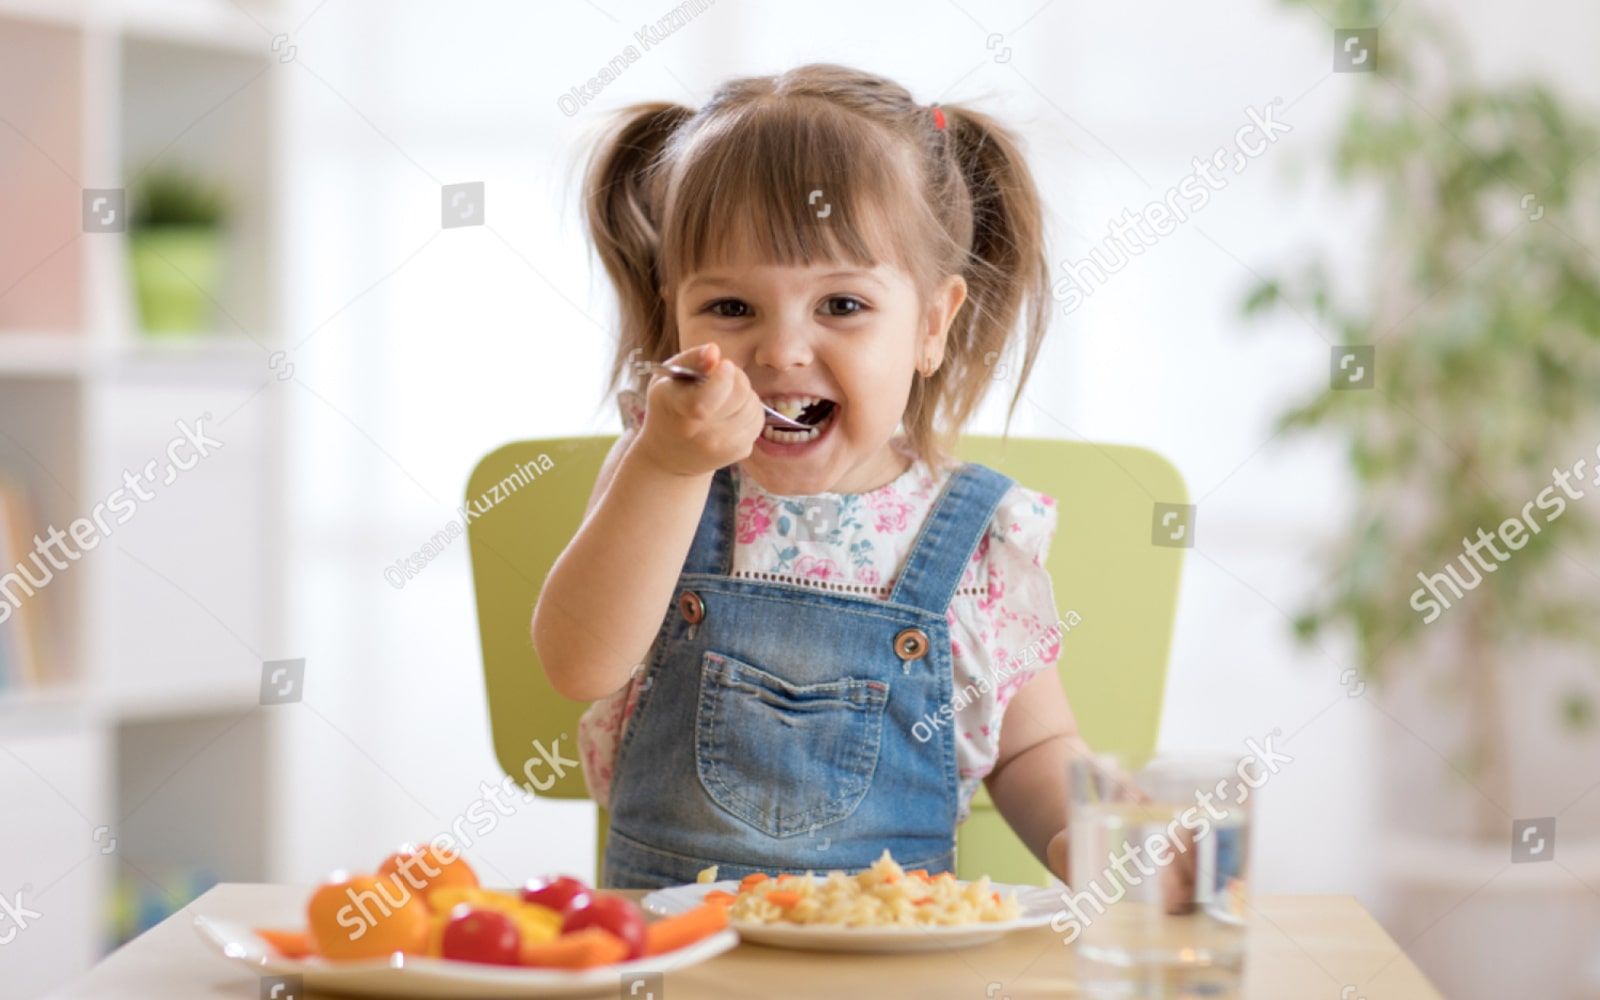 Child enjoying healthy food selections